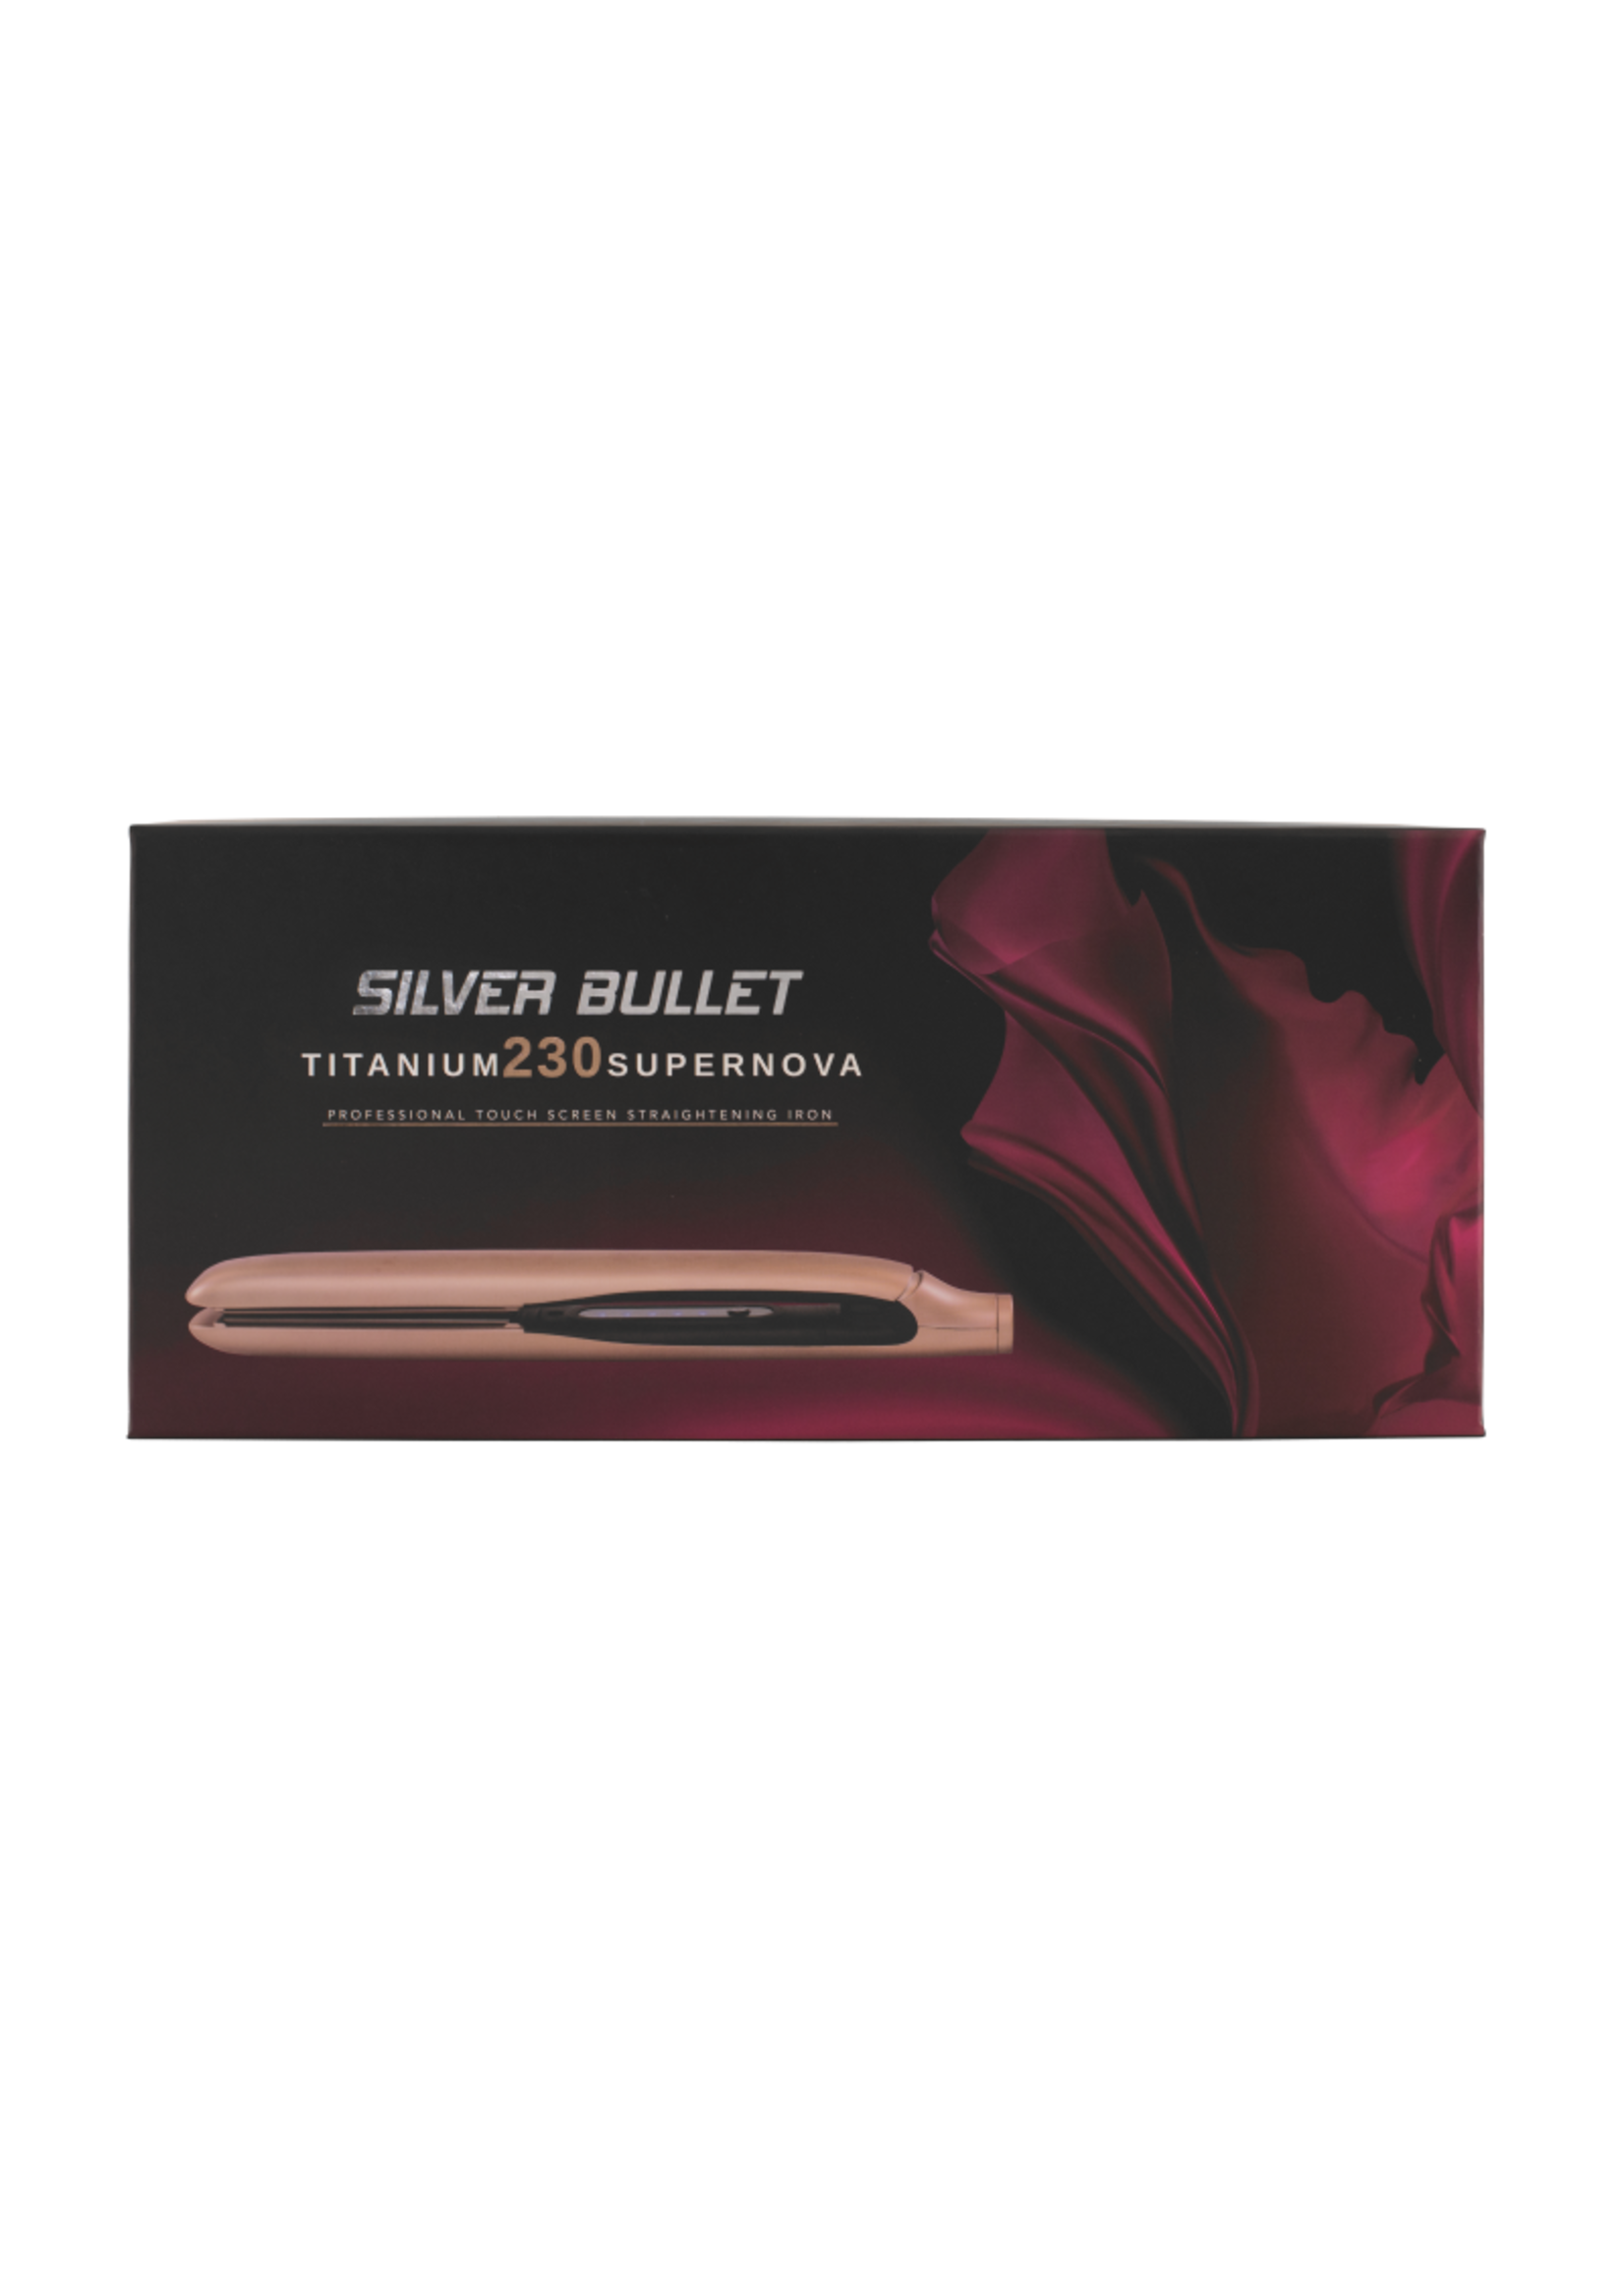 Silver Bullet Silver Bullet Titanium 230 Supernova Rose Gold